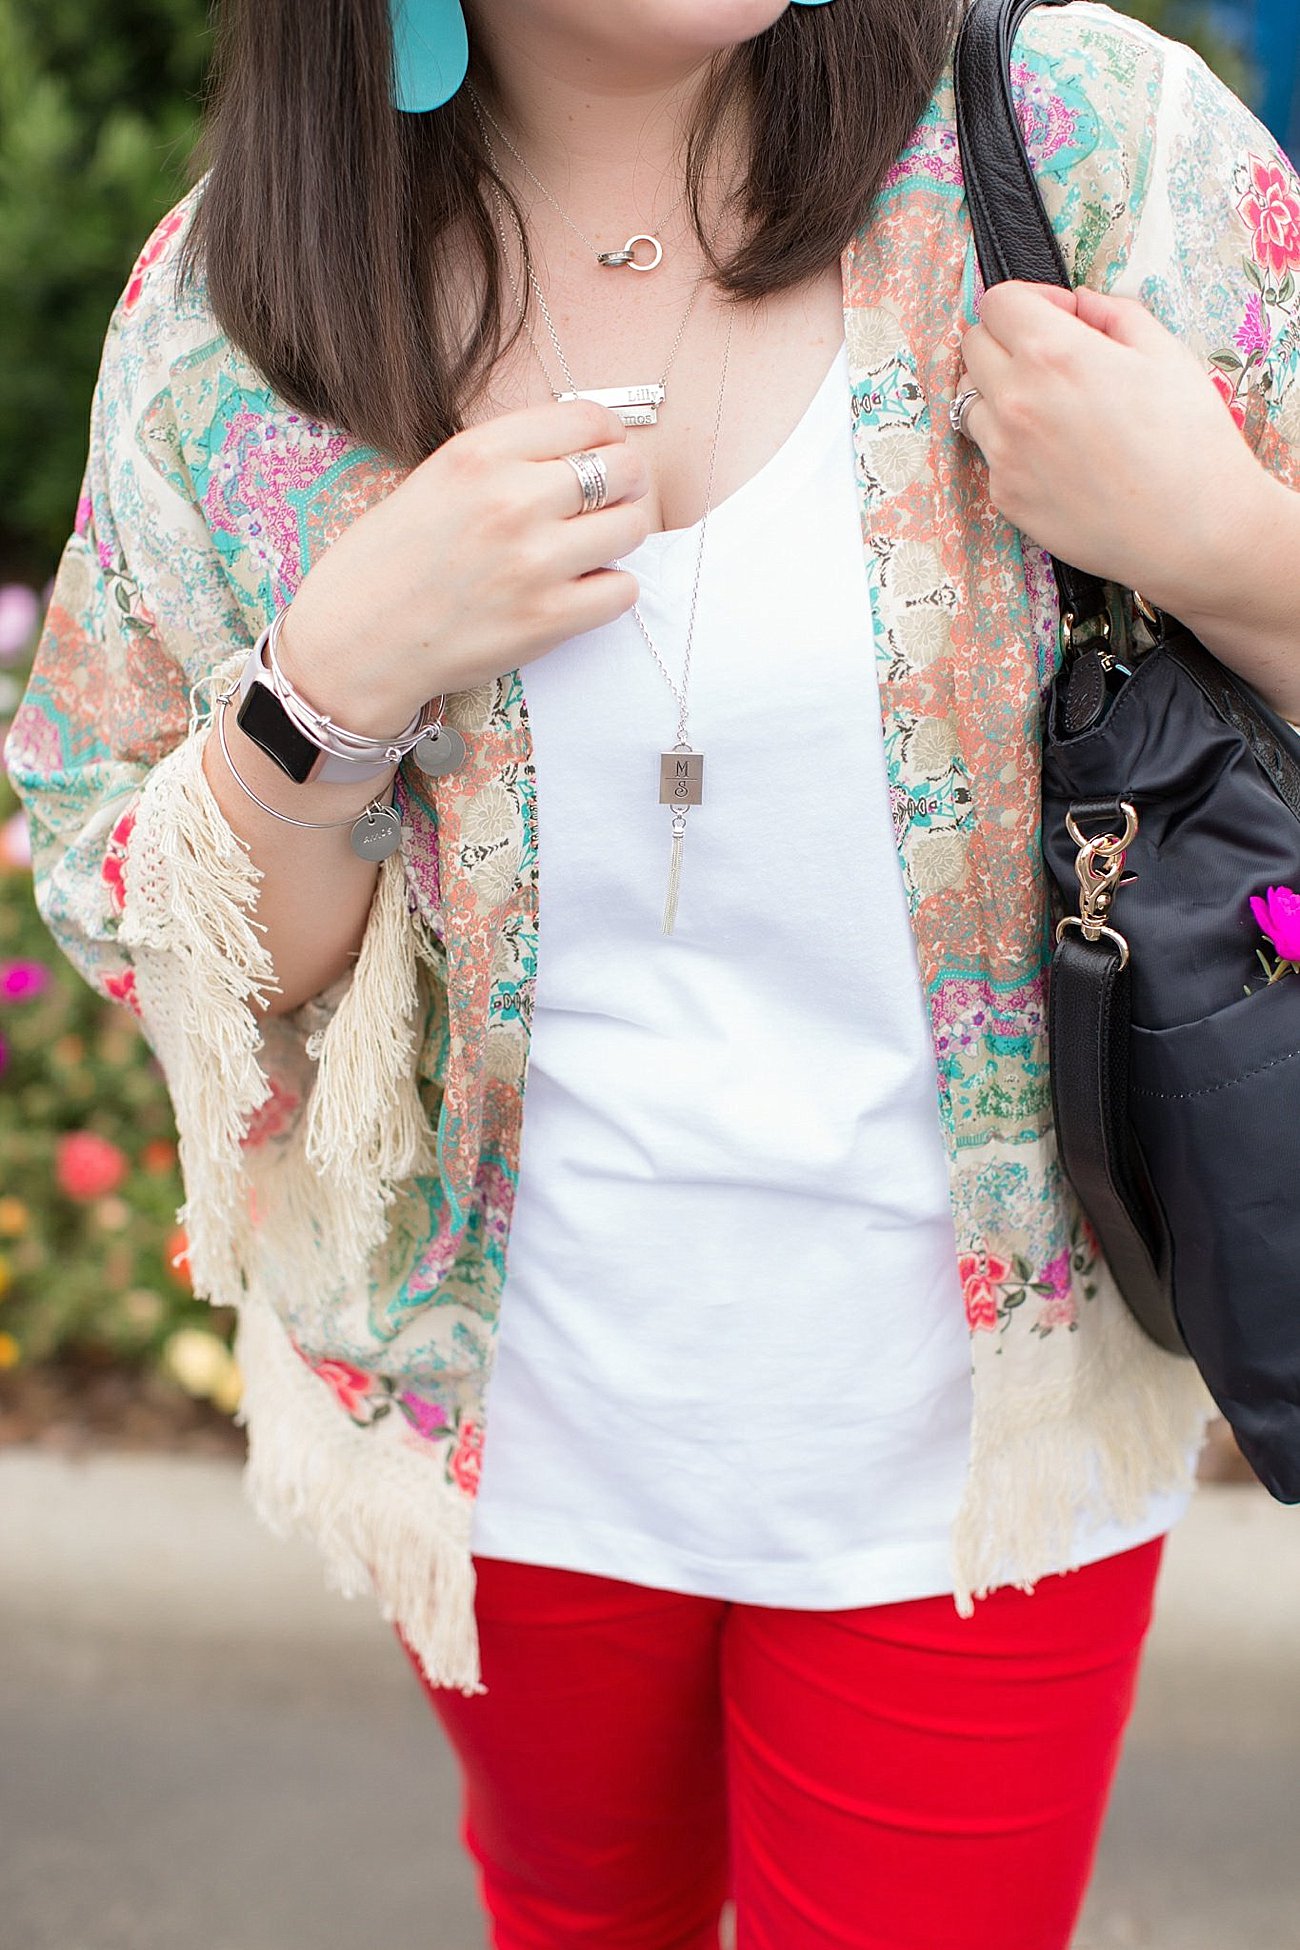 Grace & Lace kimono, PACT apparel v-neck tee, Stitch Fix "Kensie" red jeans, Lily Jade diaper bag | North Carolina Fashion Blogger (5)